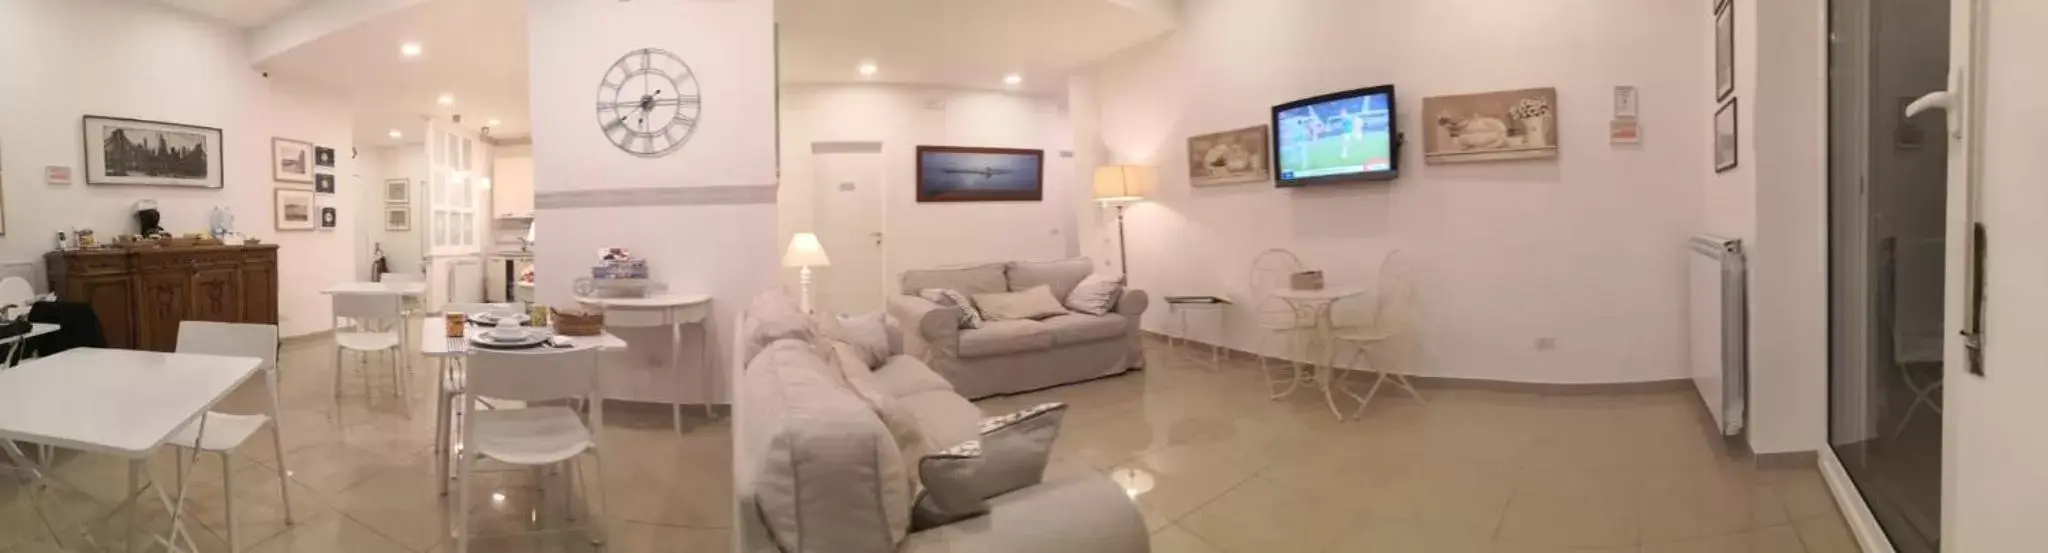 Communal lounge/ TV room in Guantai 30